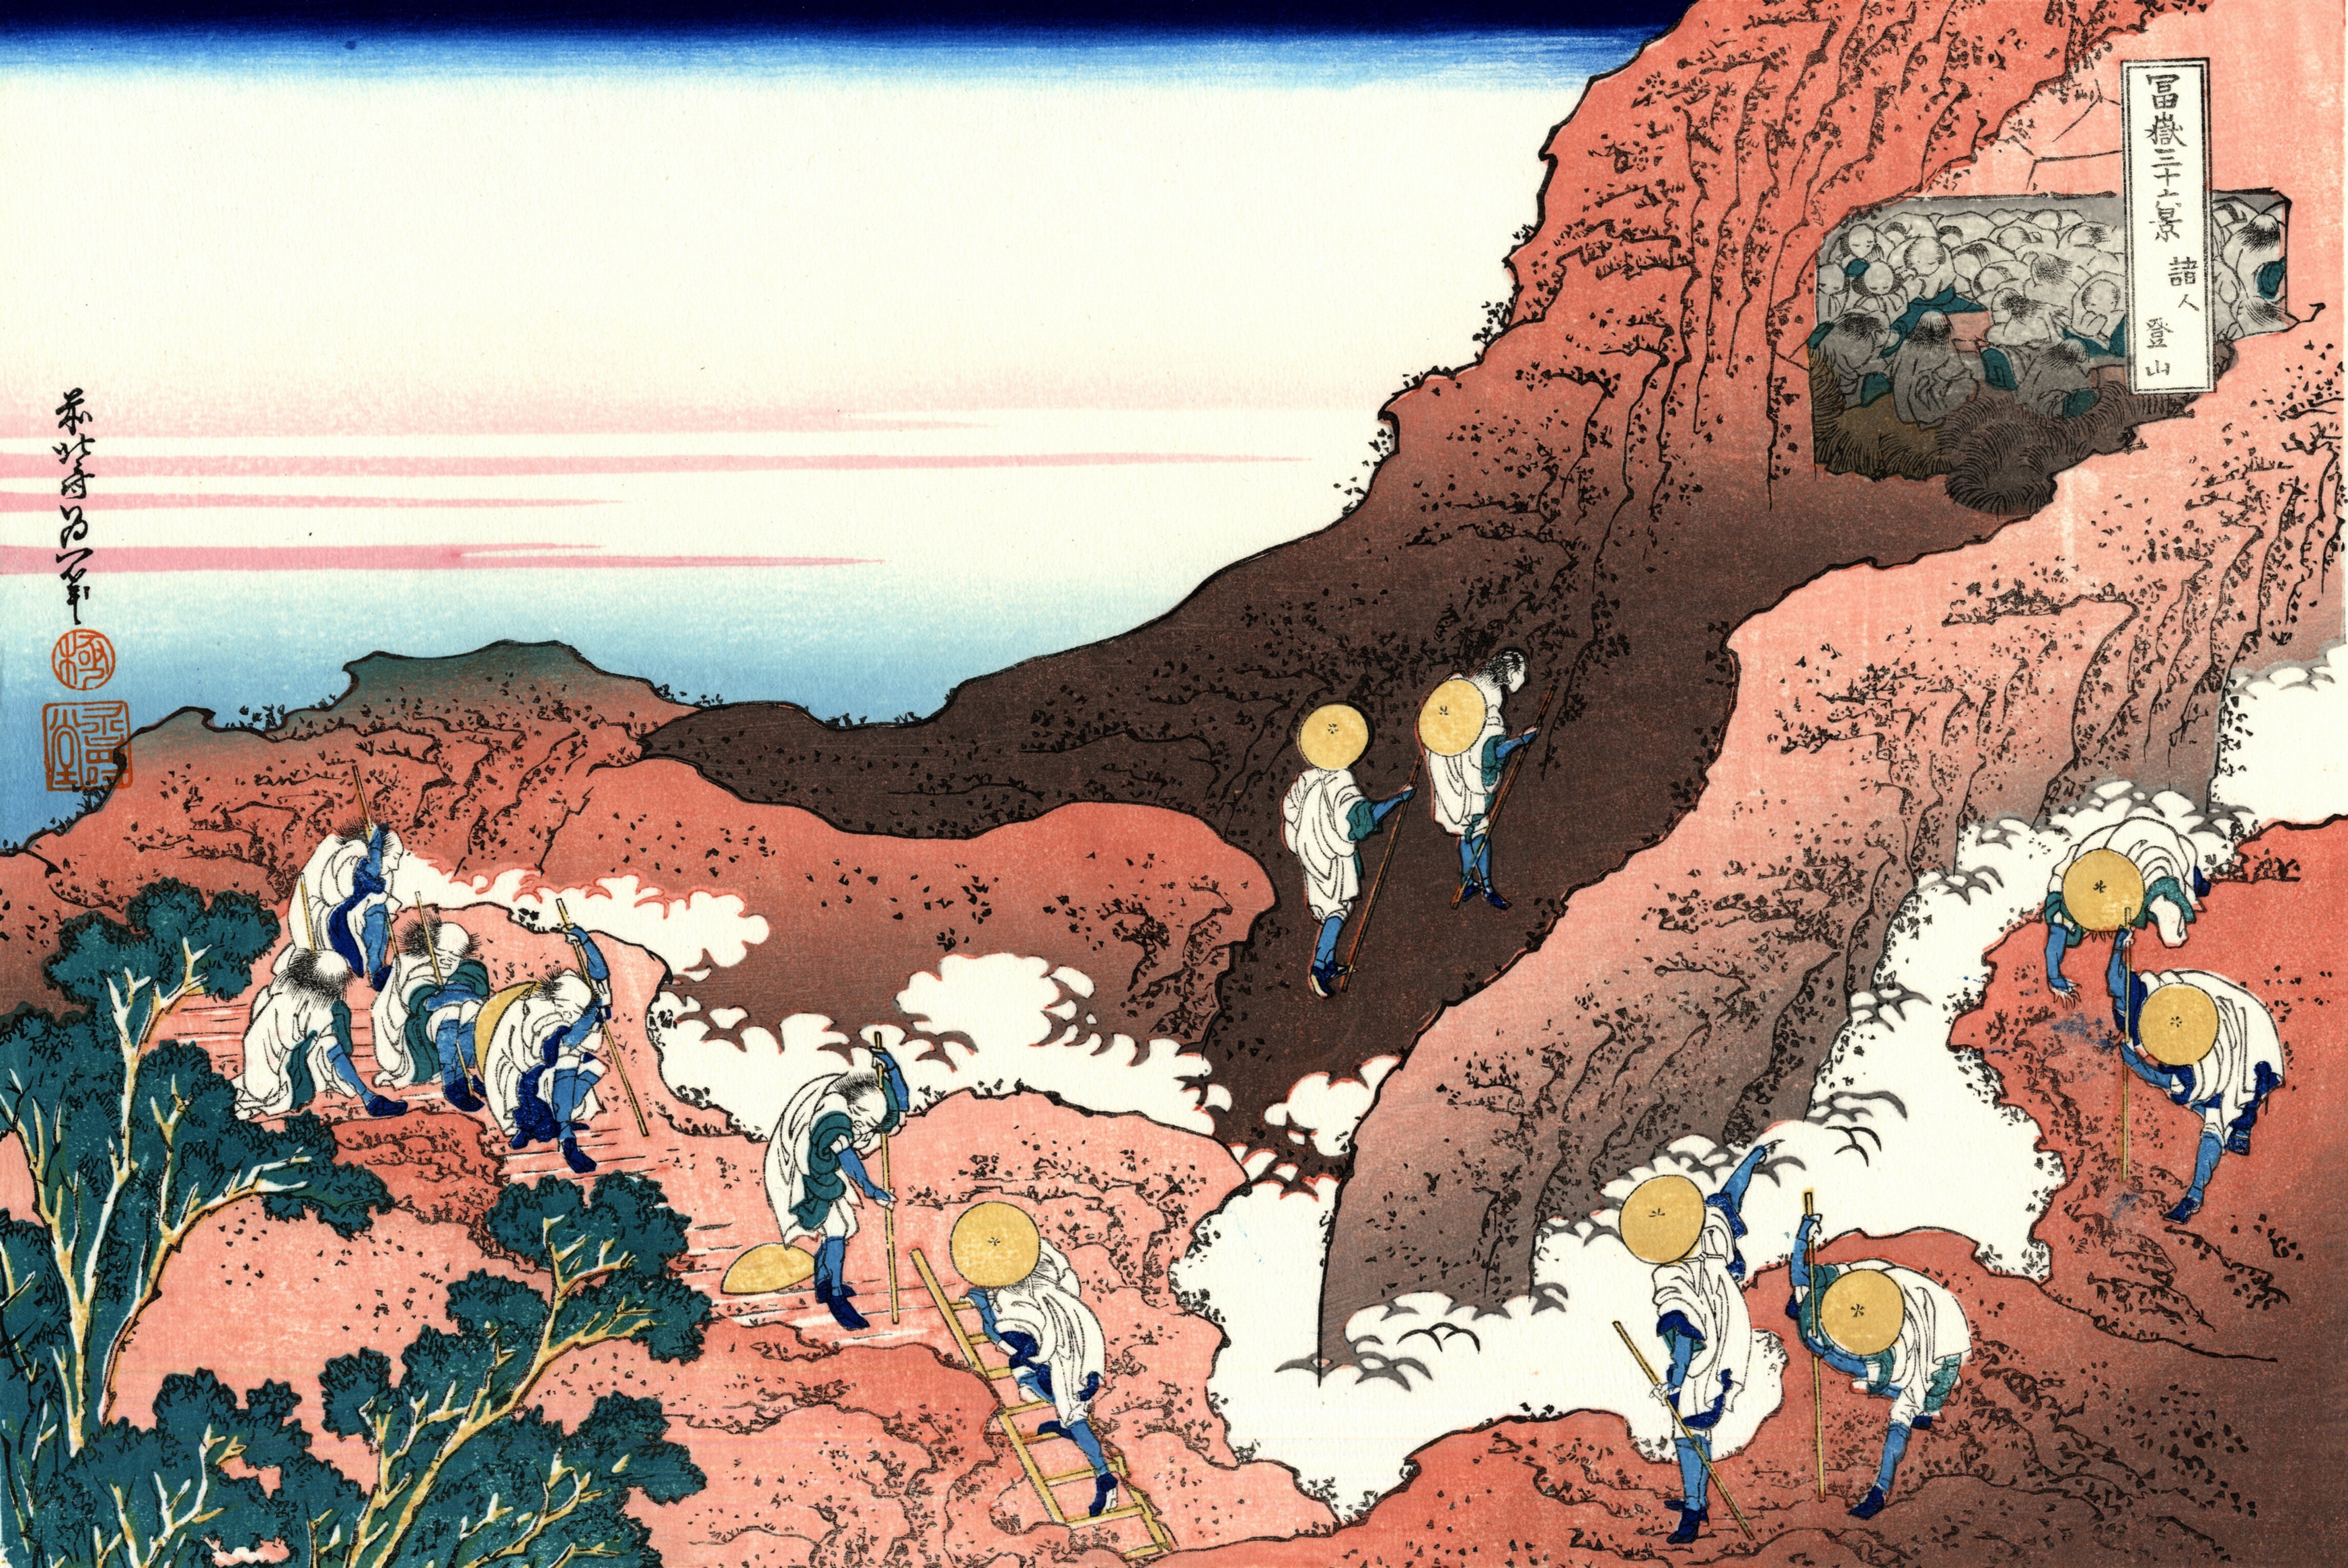 Climbing on Mt. Fuji - Katsushika Hokusai - WikiArt.org